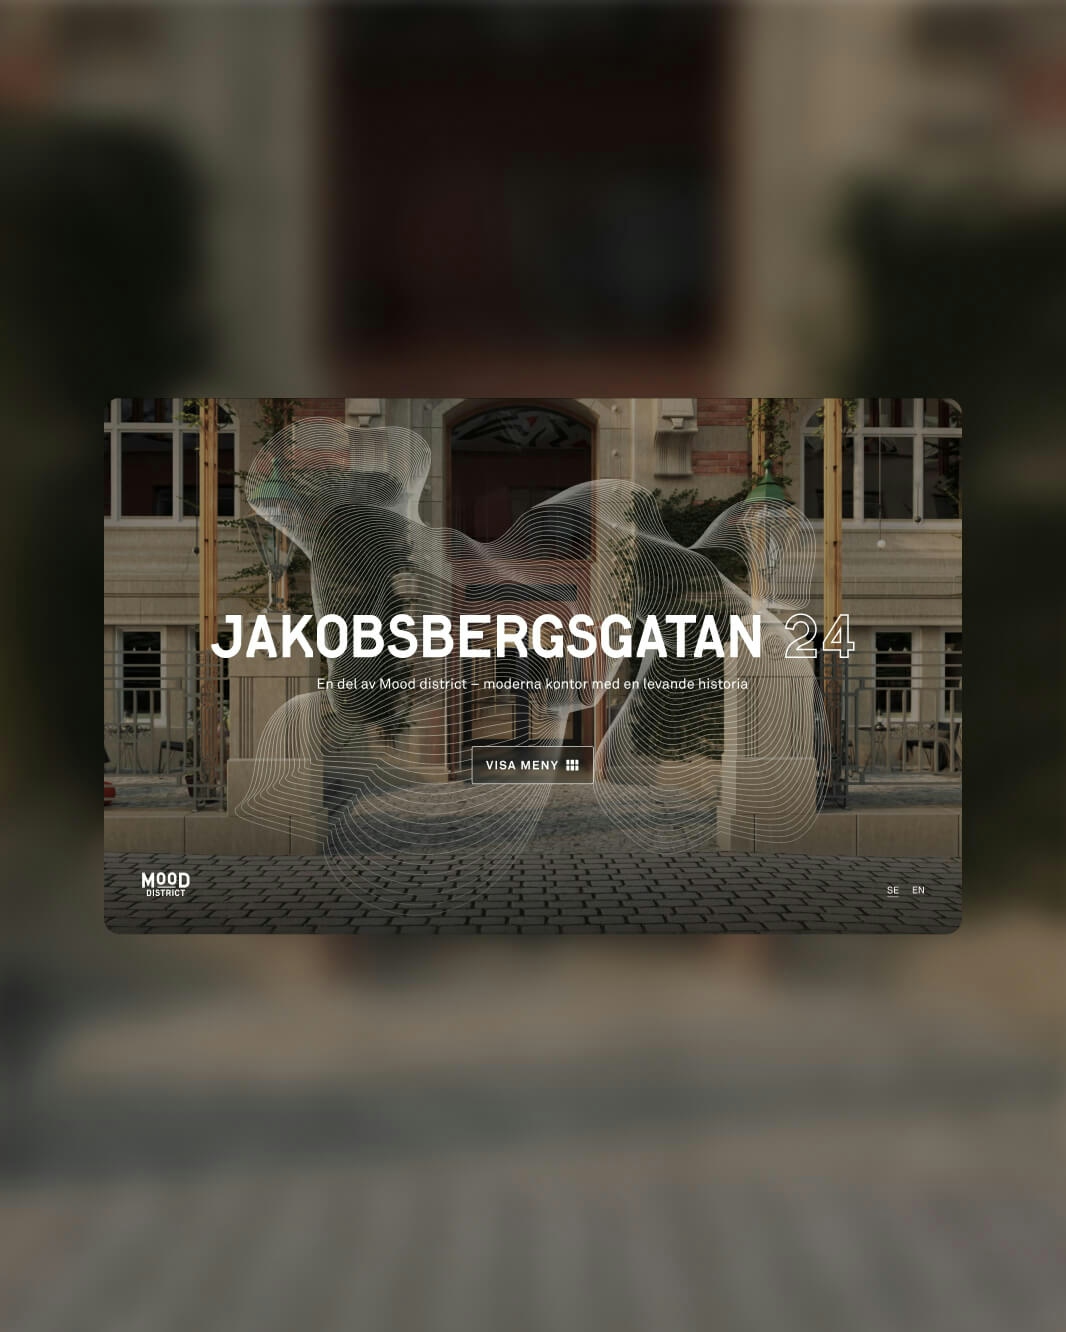 Website for Jakobsbergsgatan 24